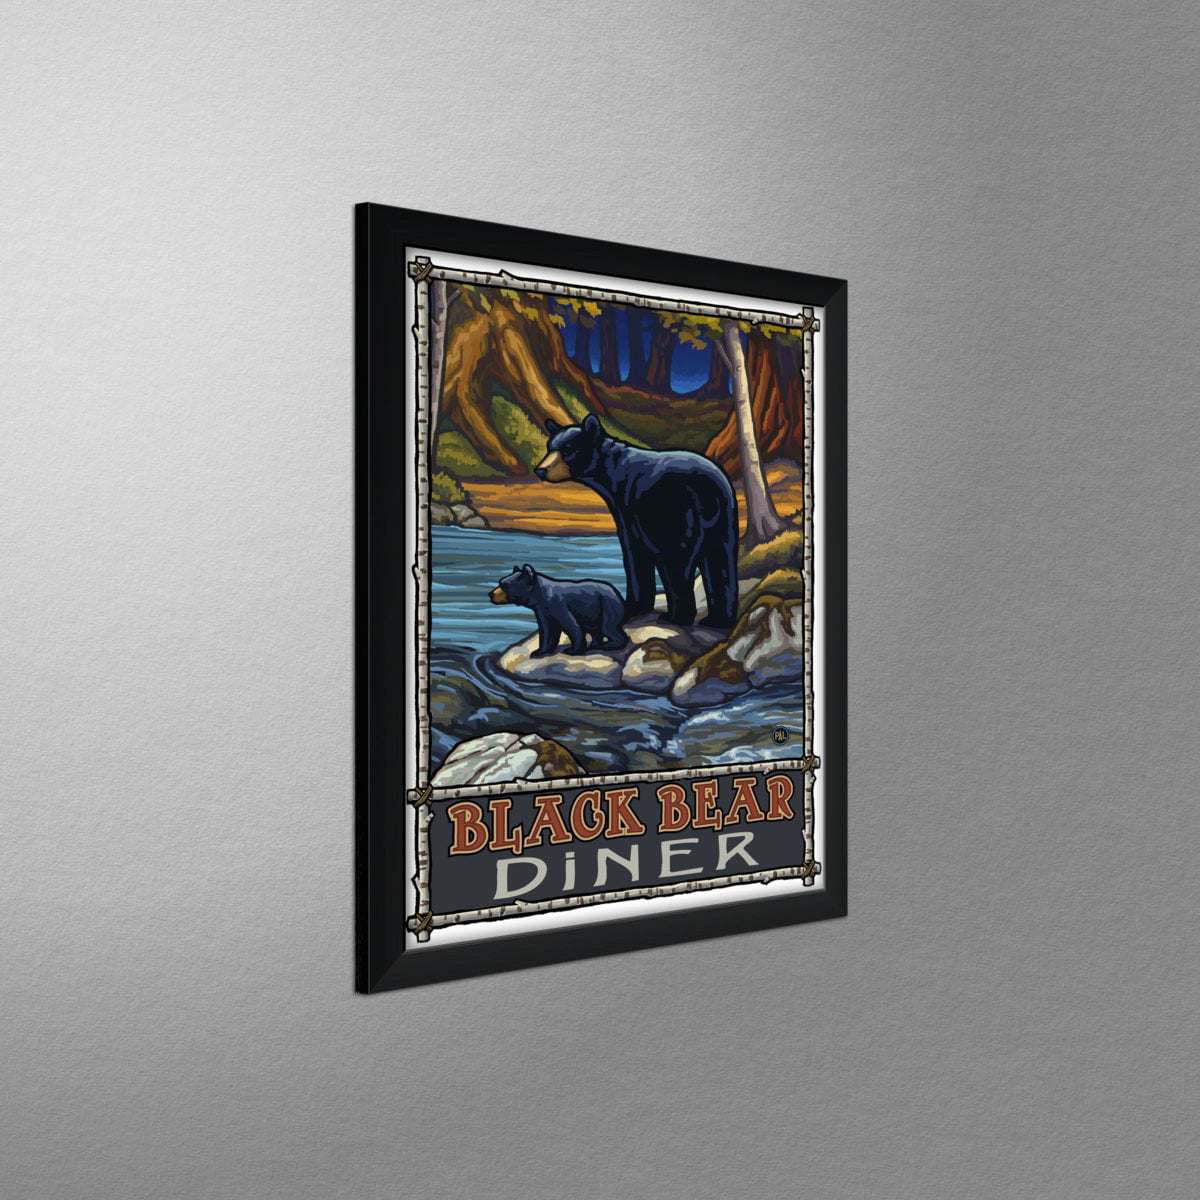 Black Bear Diner Bears In Stream Framed Art Print by Paul A. Lanquist.  Print Size: 18